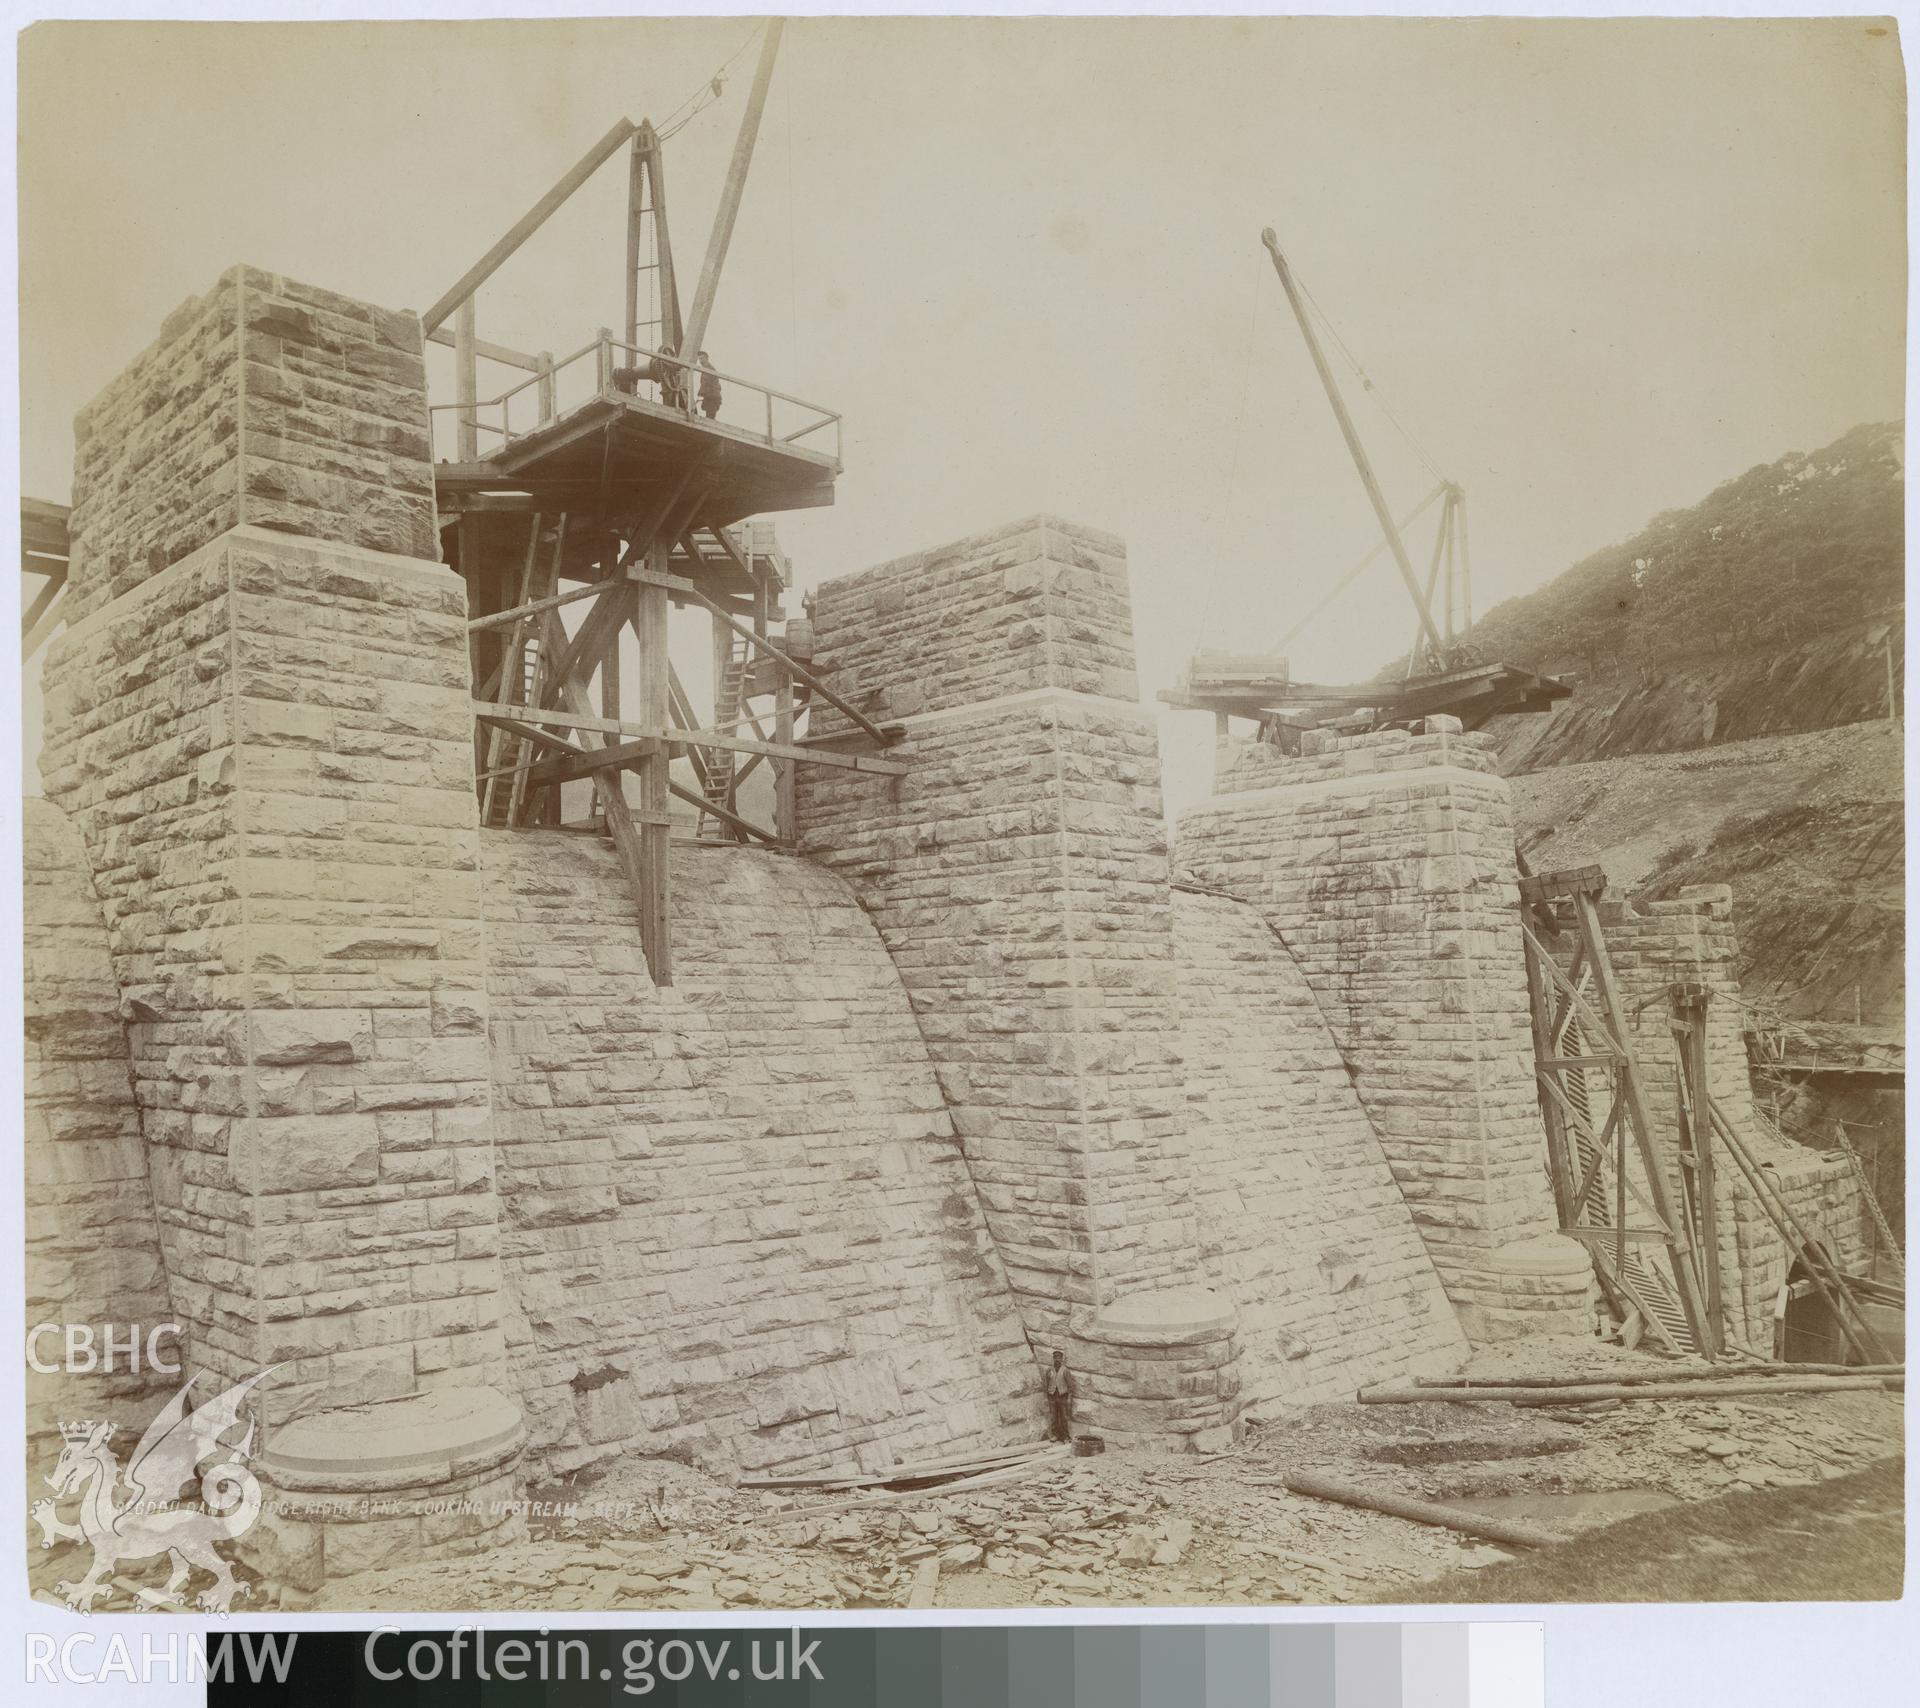 Digital copy of an albumen print from Edward Hubbard Collection showing Garreg Ddu Dam bridge right bank looking upstream, taken September 1898.